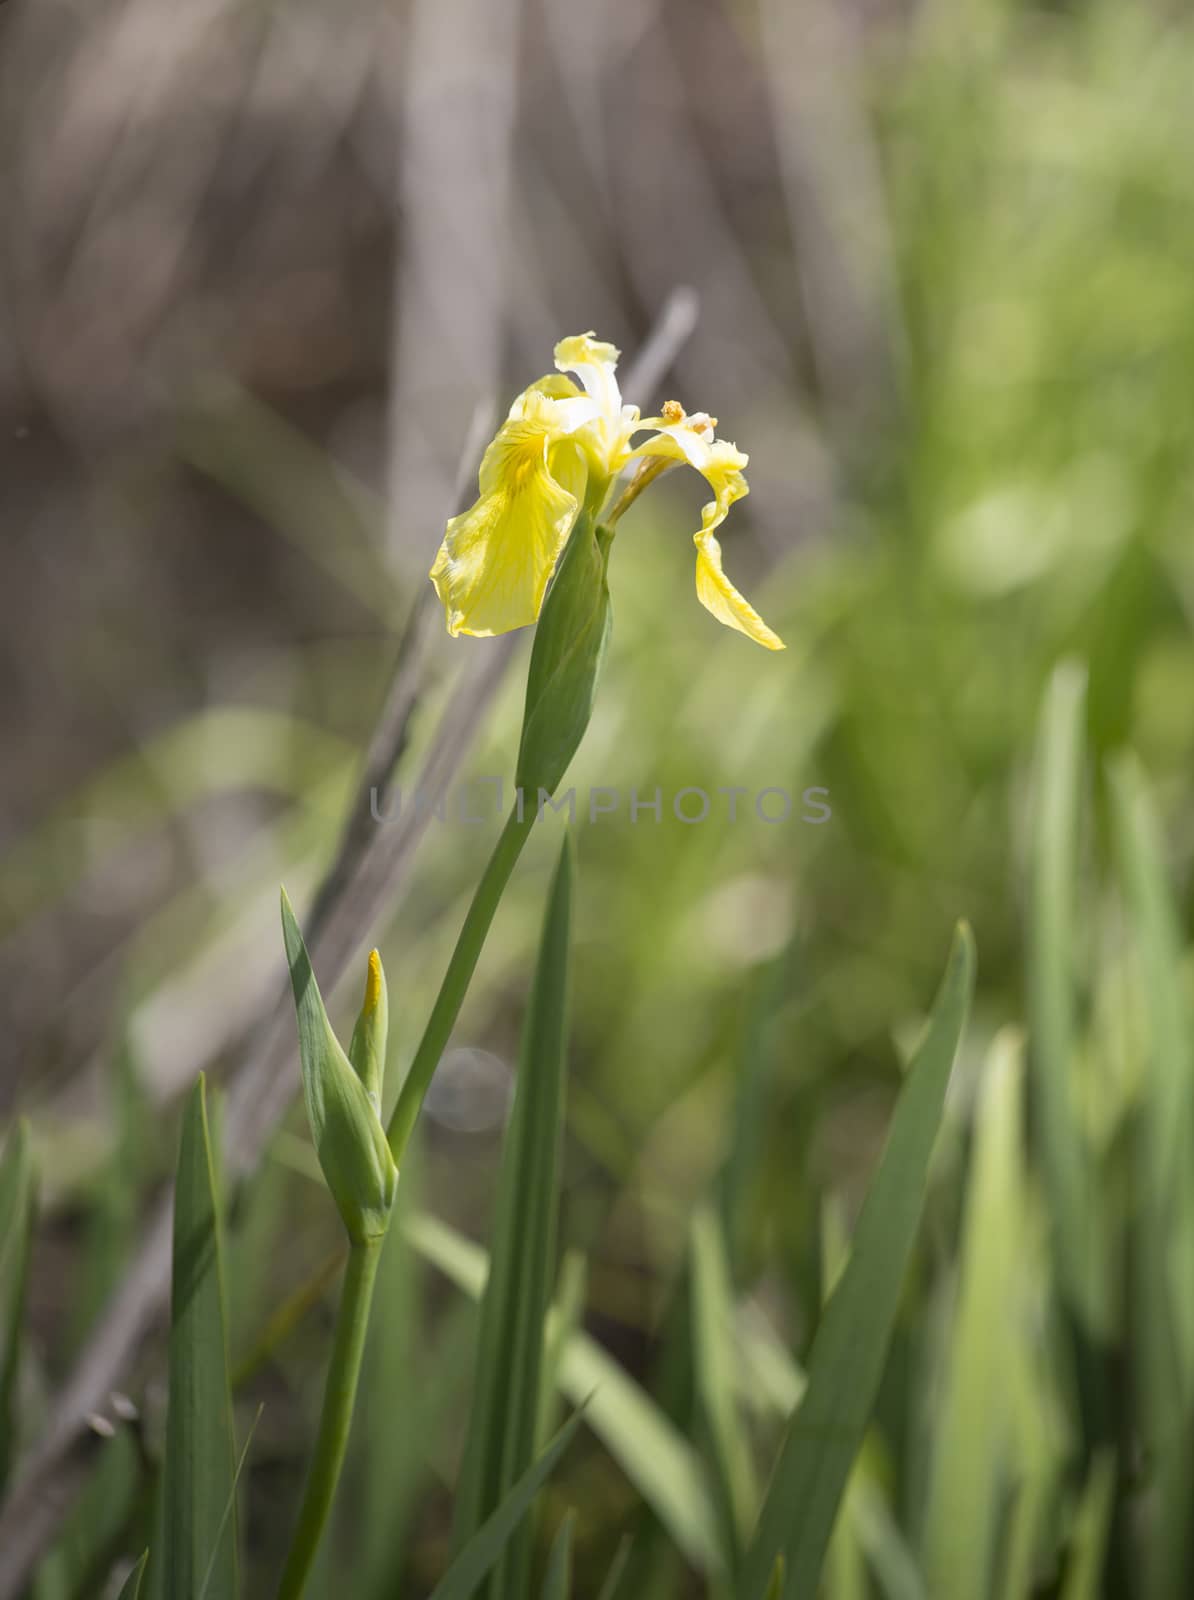 Close up of a single yellow flag iris flower